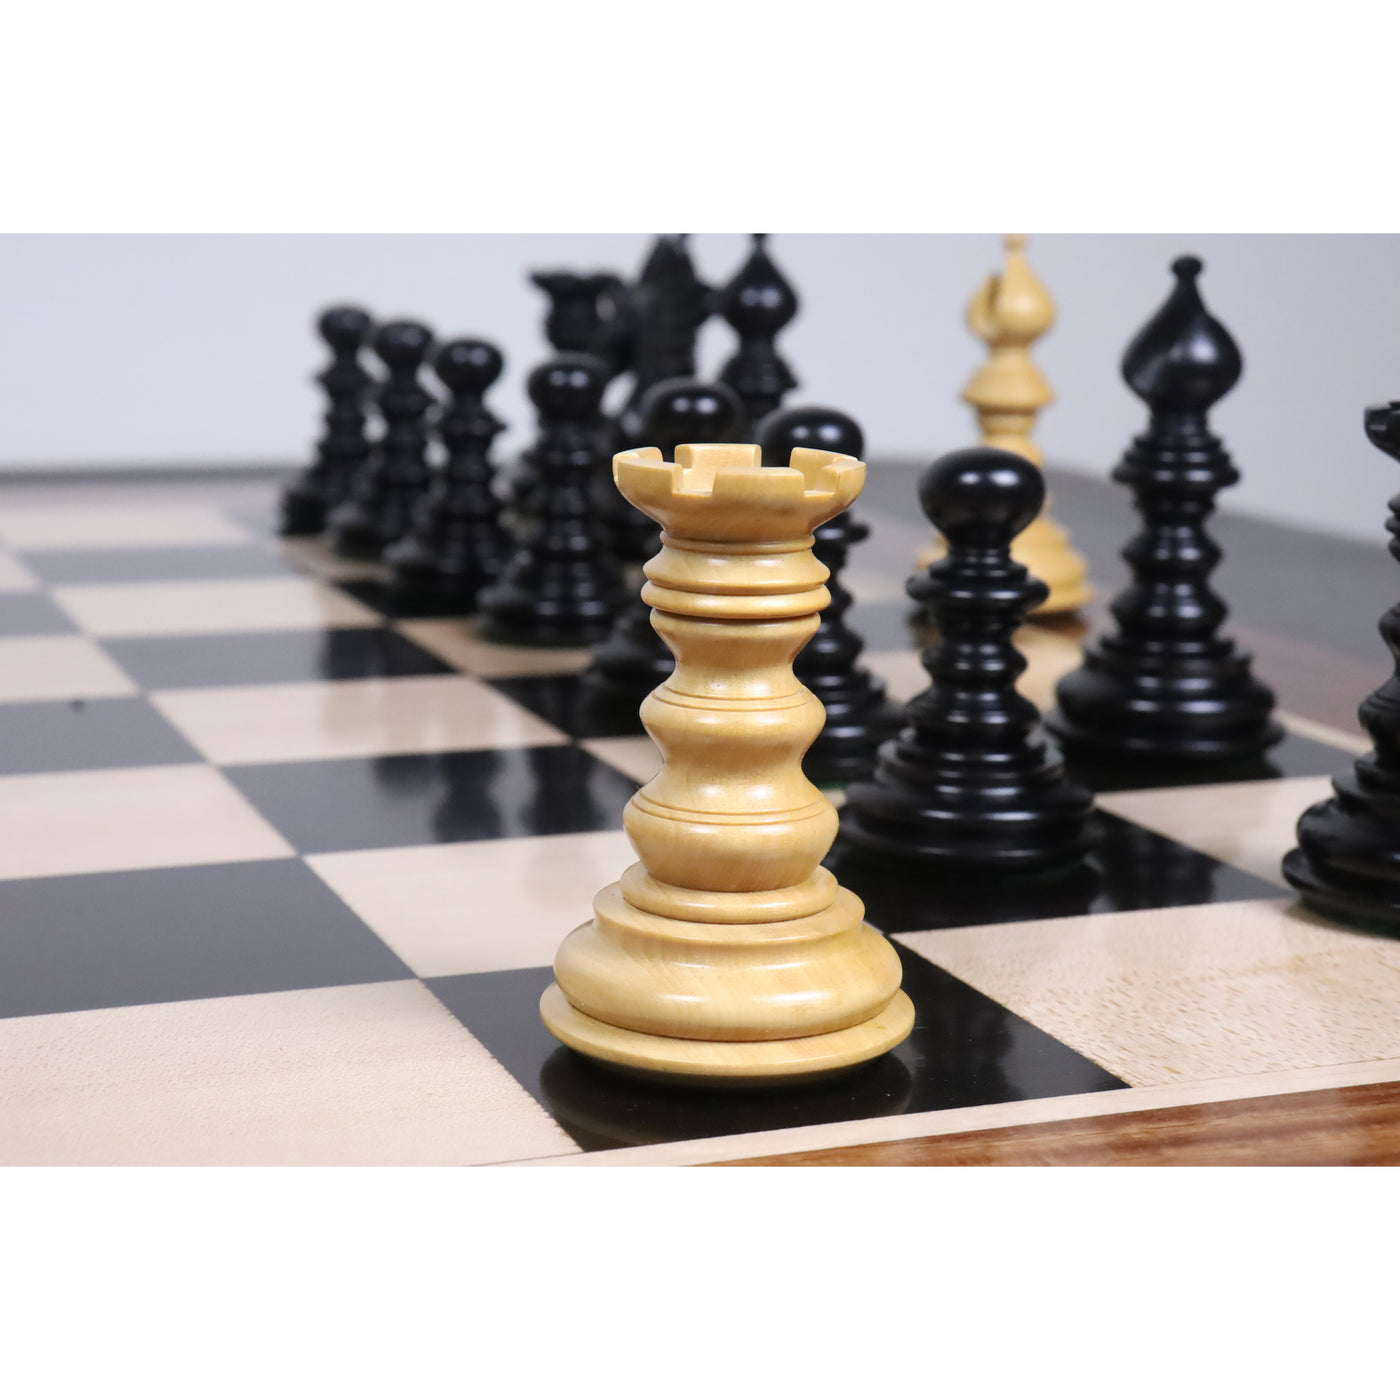 4.3" Marengo Luxury Staunton Chess Set- Chess Pieces Only- Ebony Wood Triple Weight